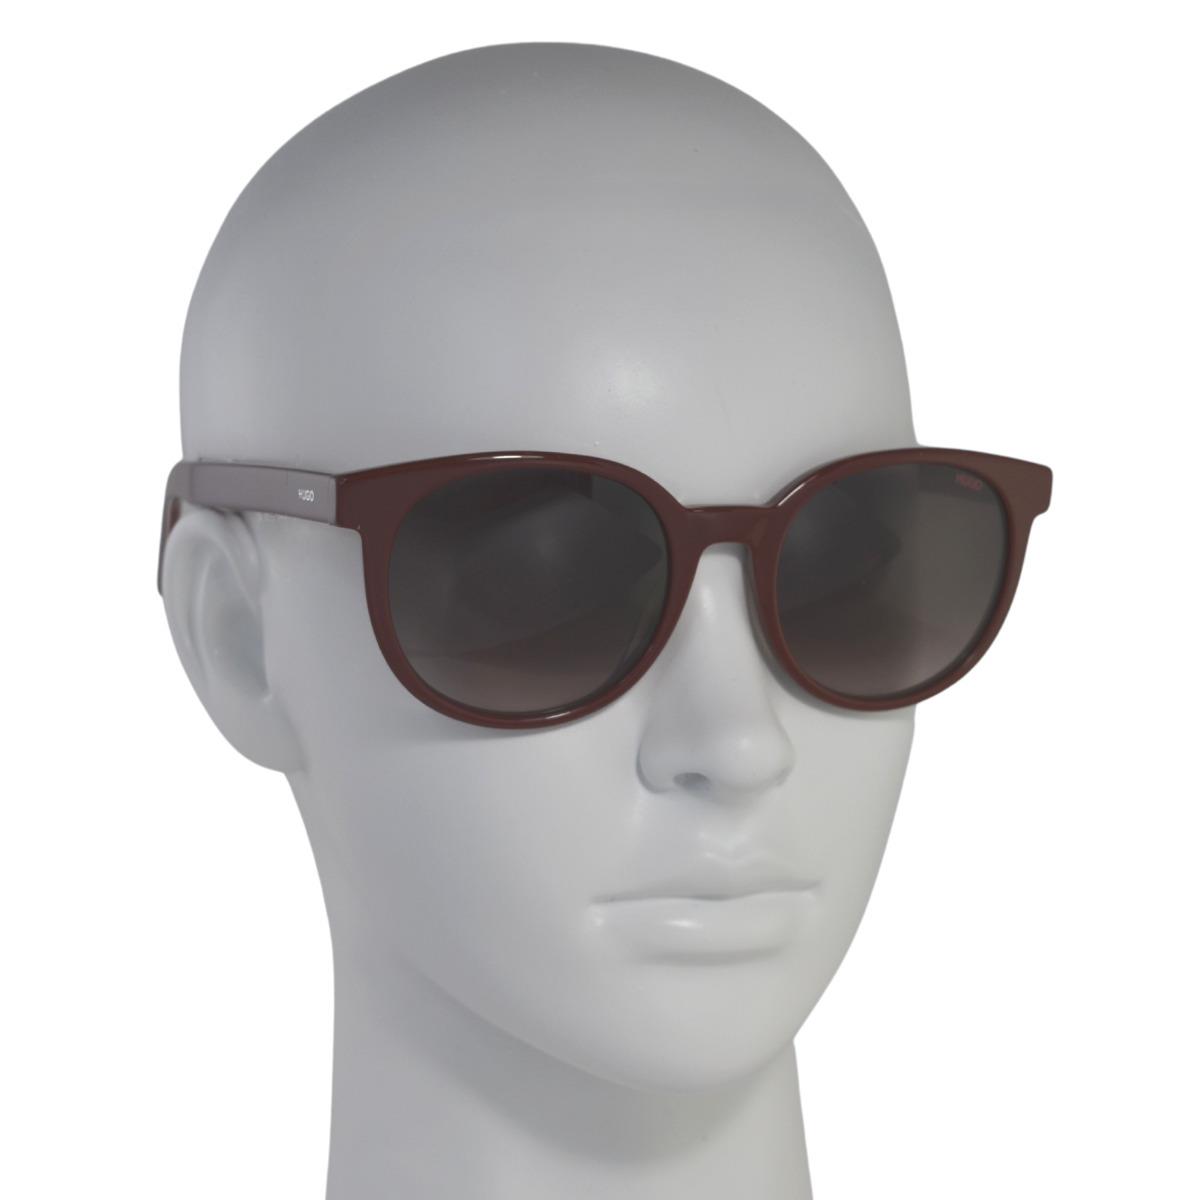 Hugo Boss Sunglasses - HG 1011/S 0C9A /ha - Red/brown Gradient 52-20-145